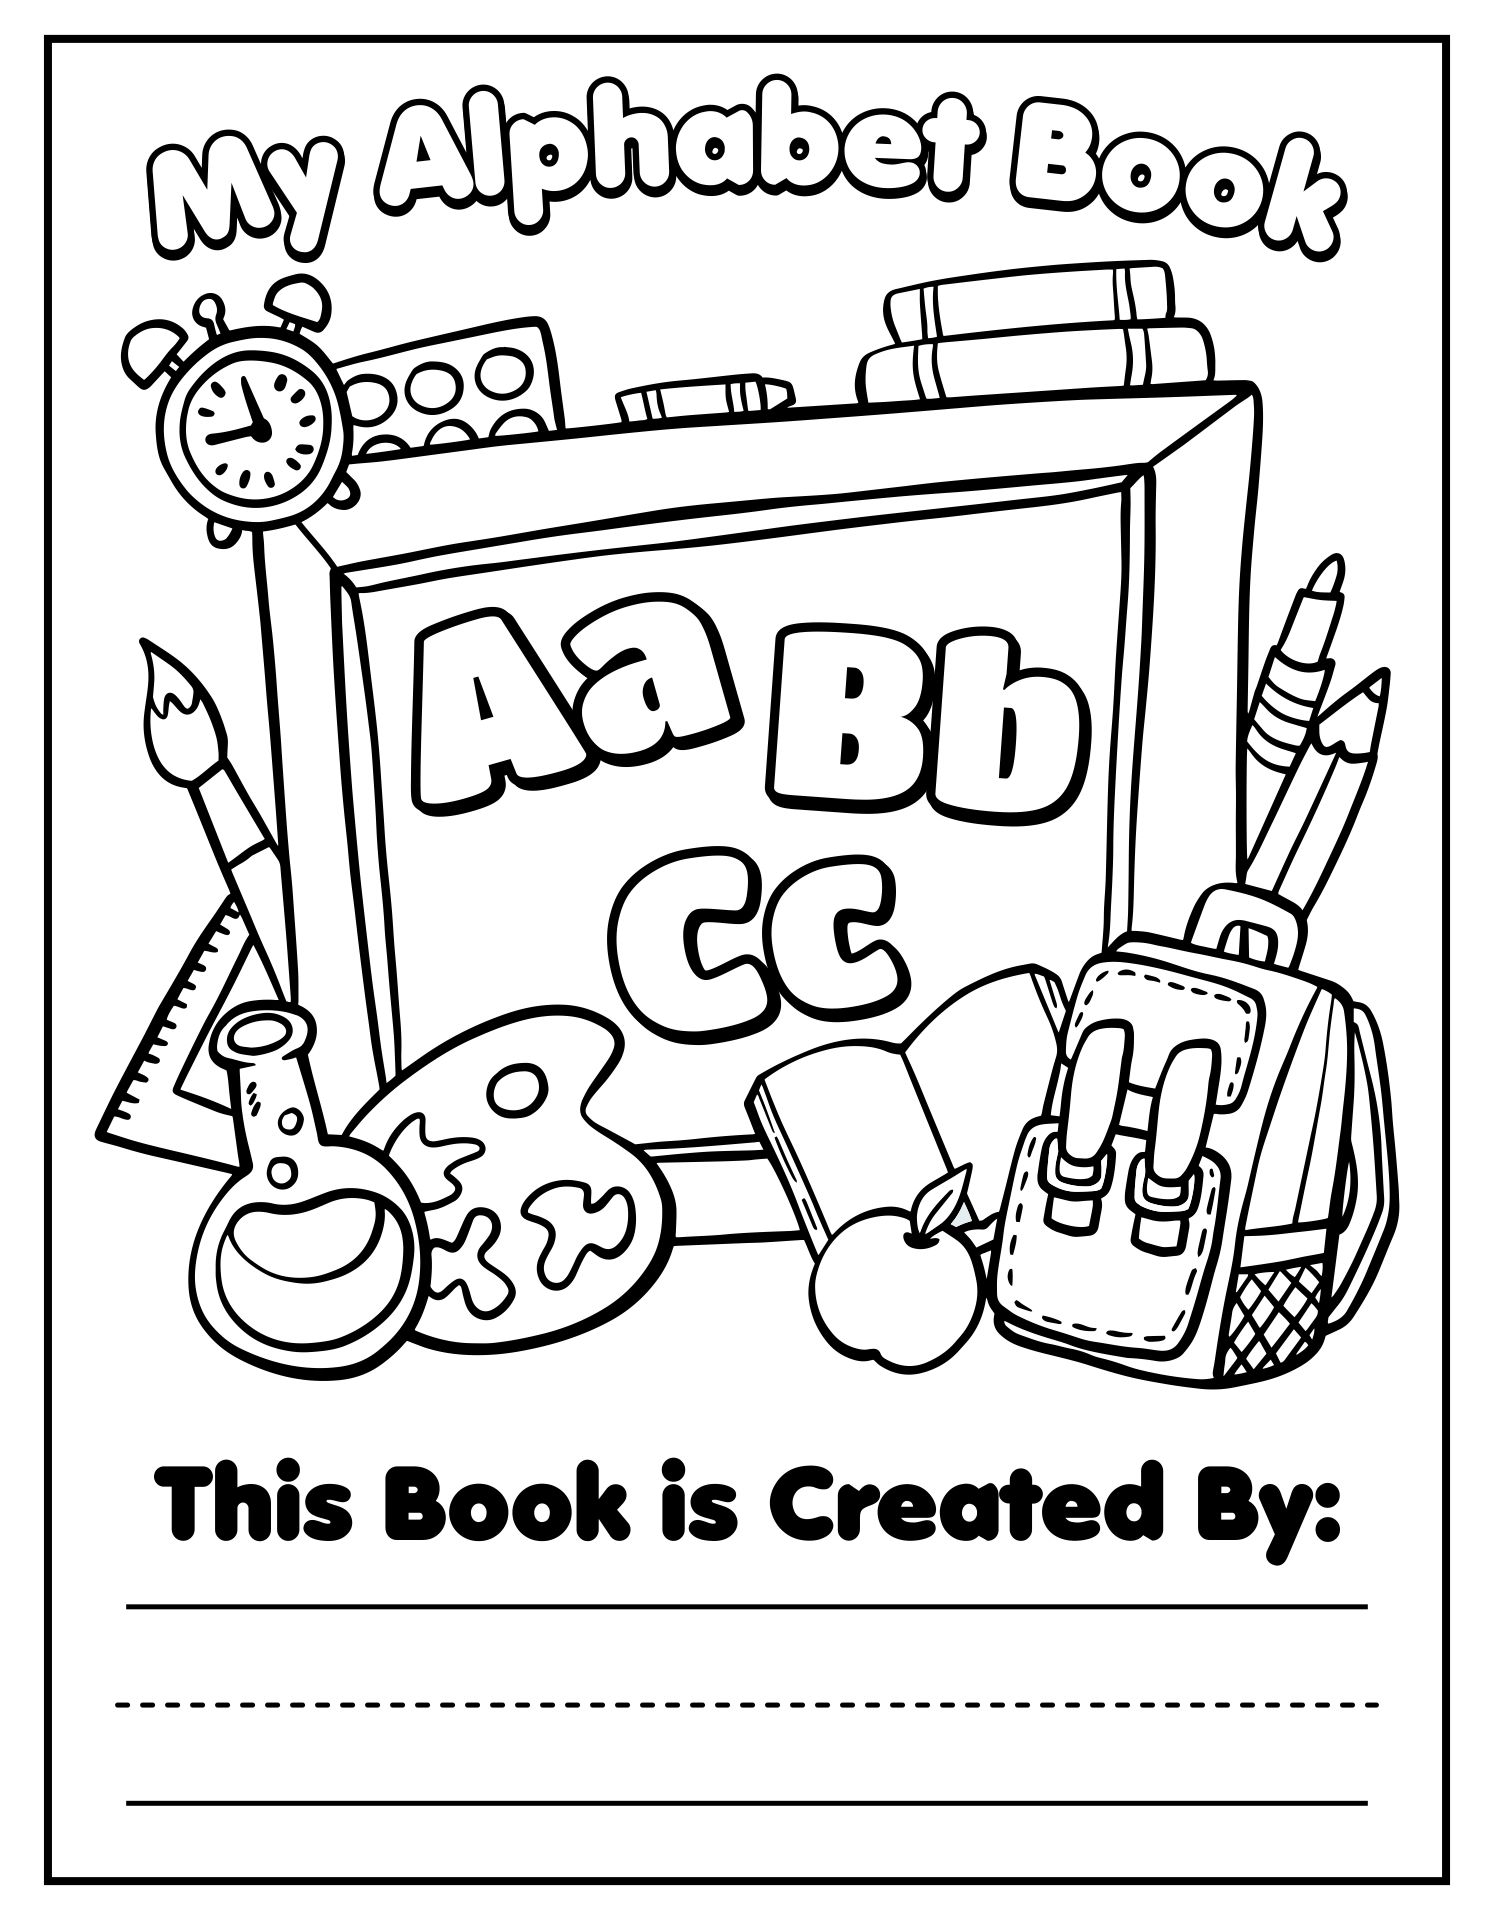 Alphabet Book Cover Page